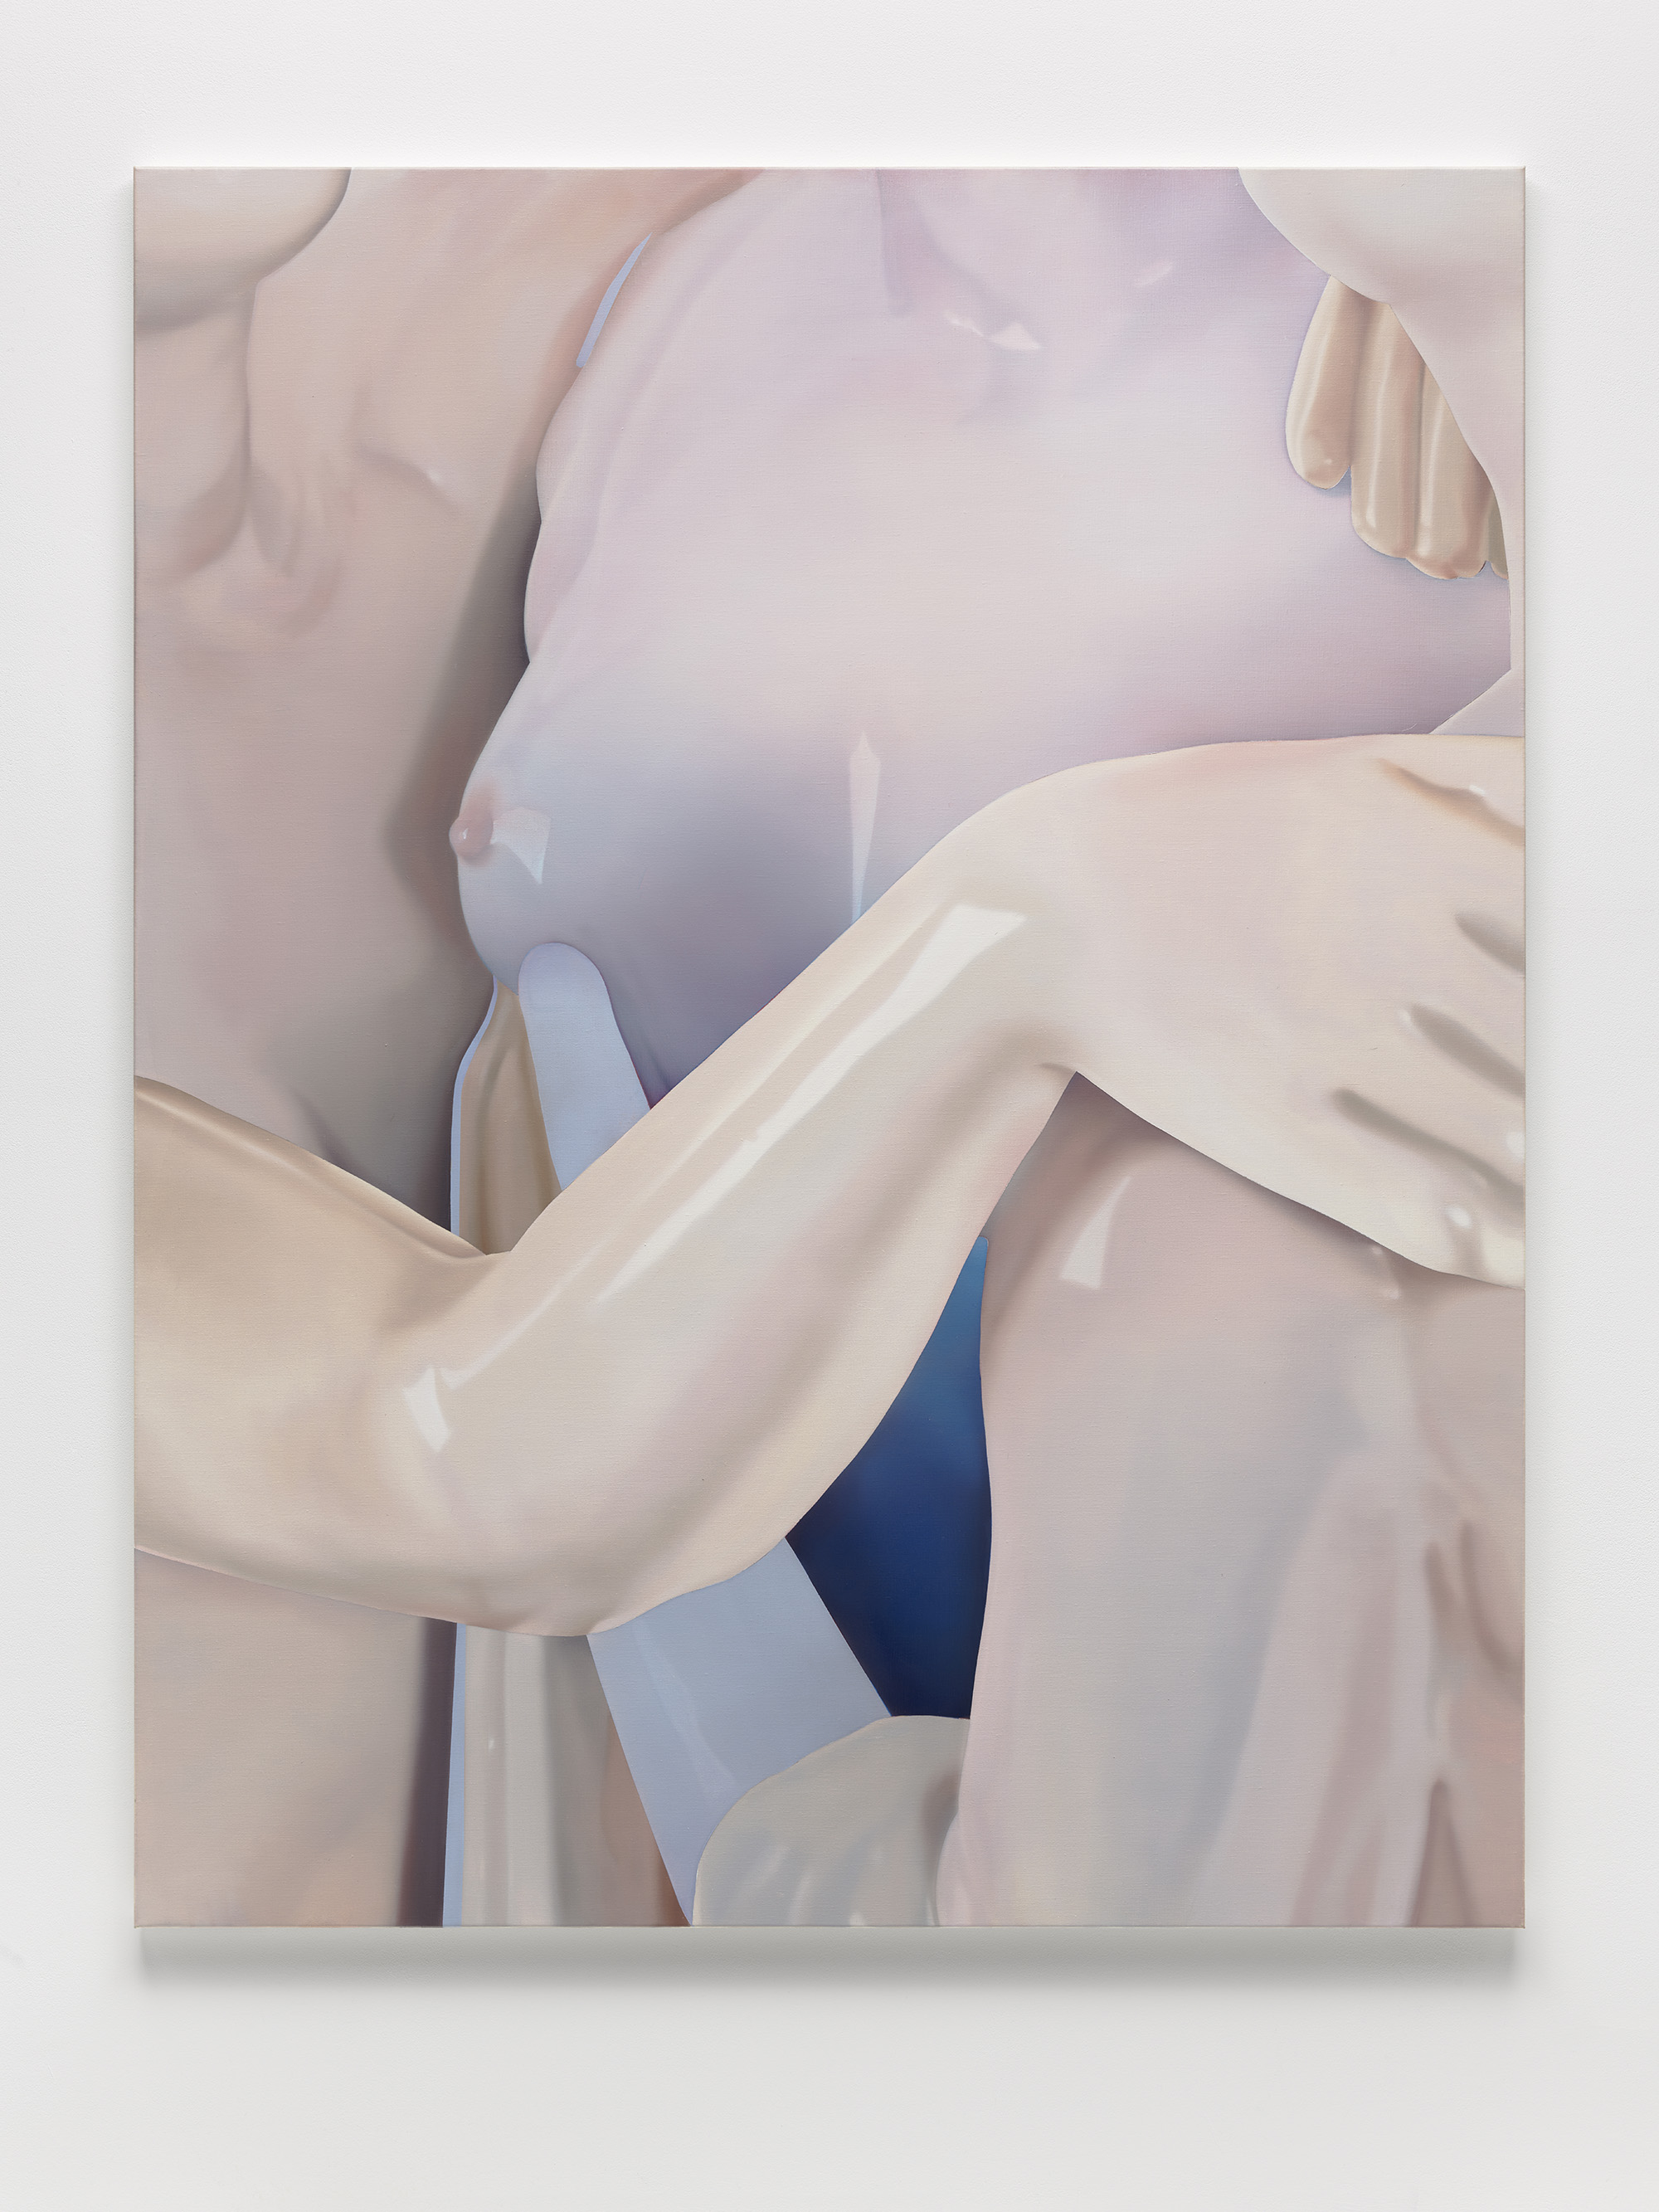 Vivian Greven, Tic IV, 2022, oil on canvas, 190 x 150 cm, 74 3/4 x 59 in.